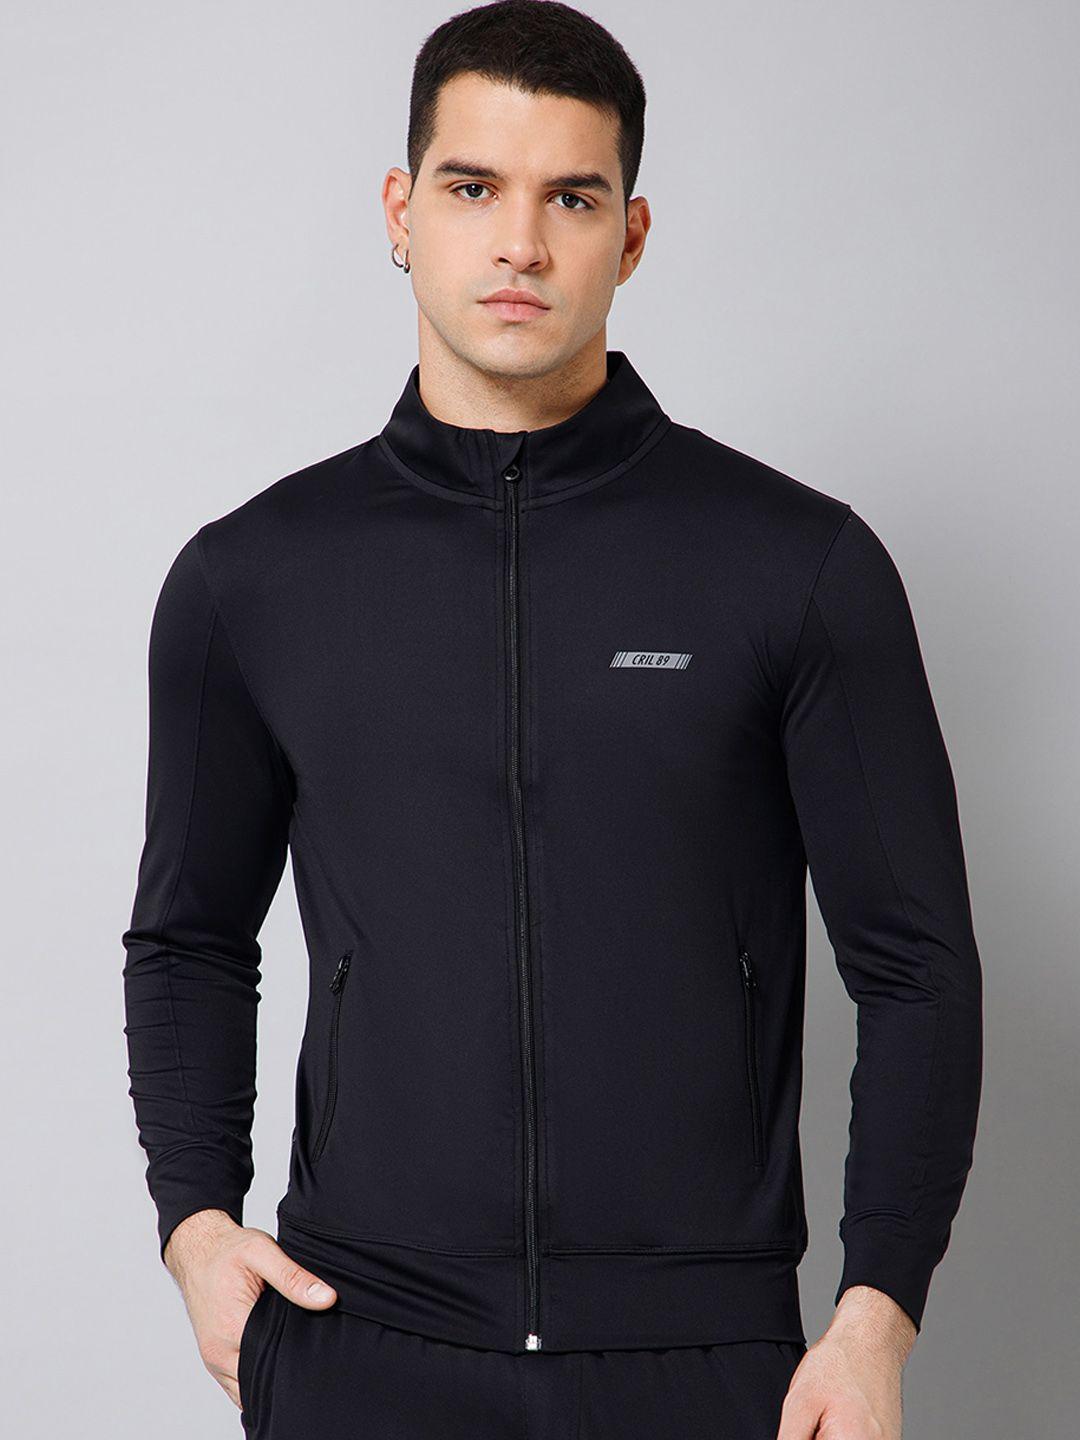 cantabil mock collar long sleeve lightweight running sporty jacket